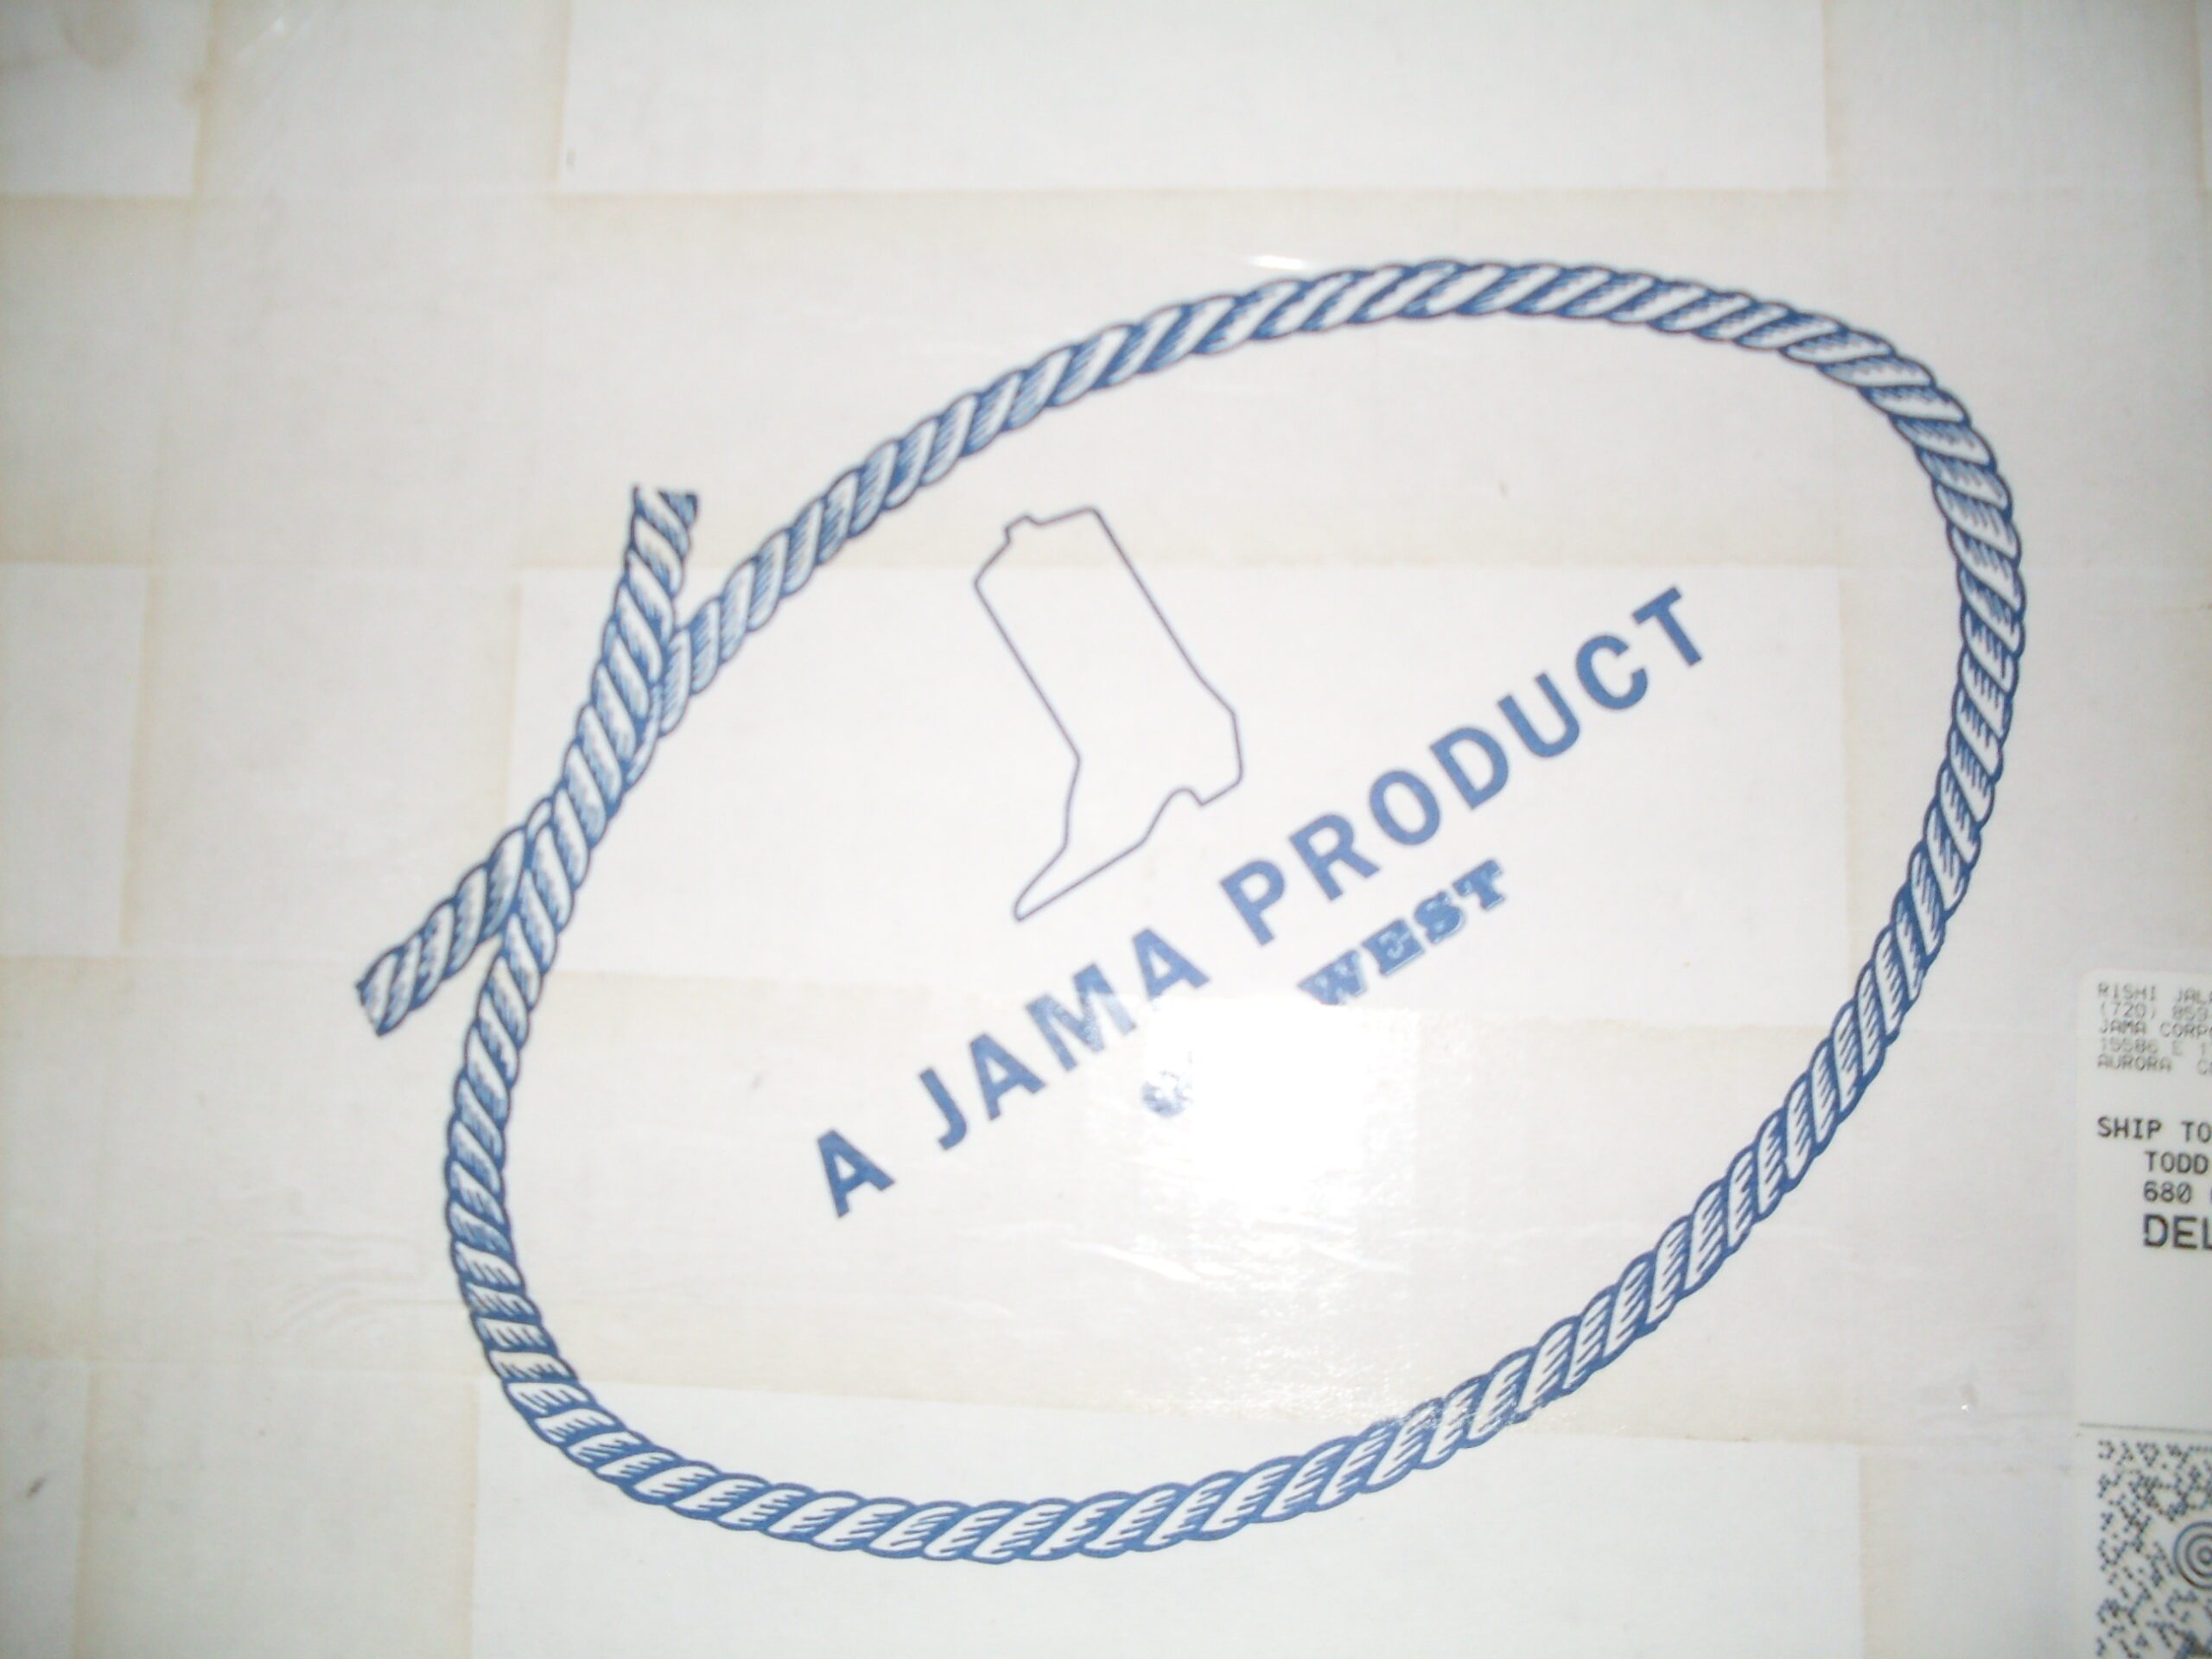 JAMA Boots